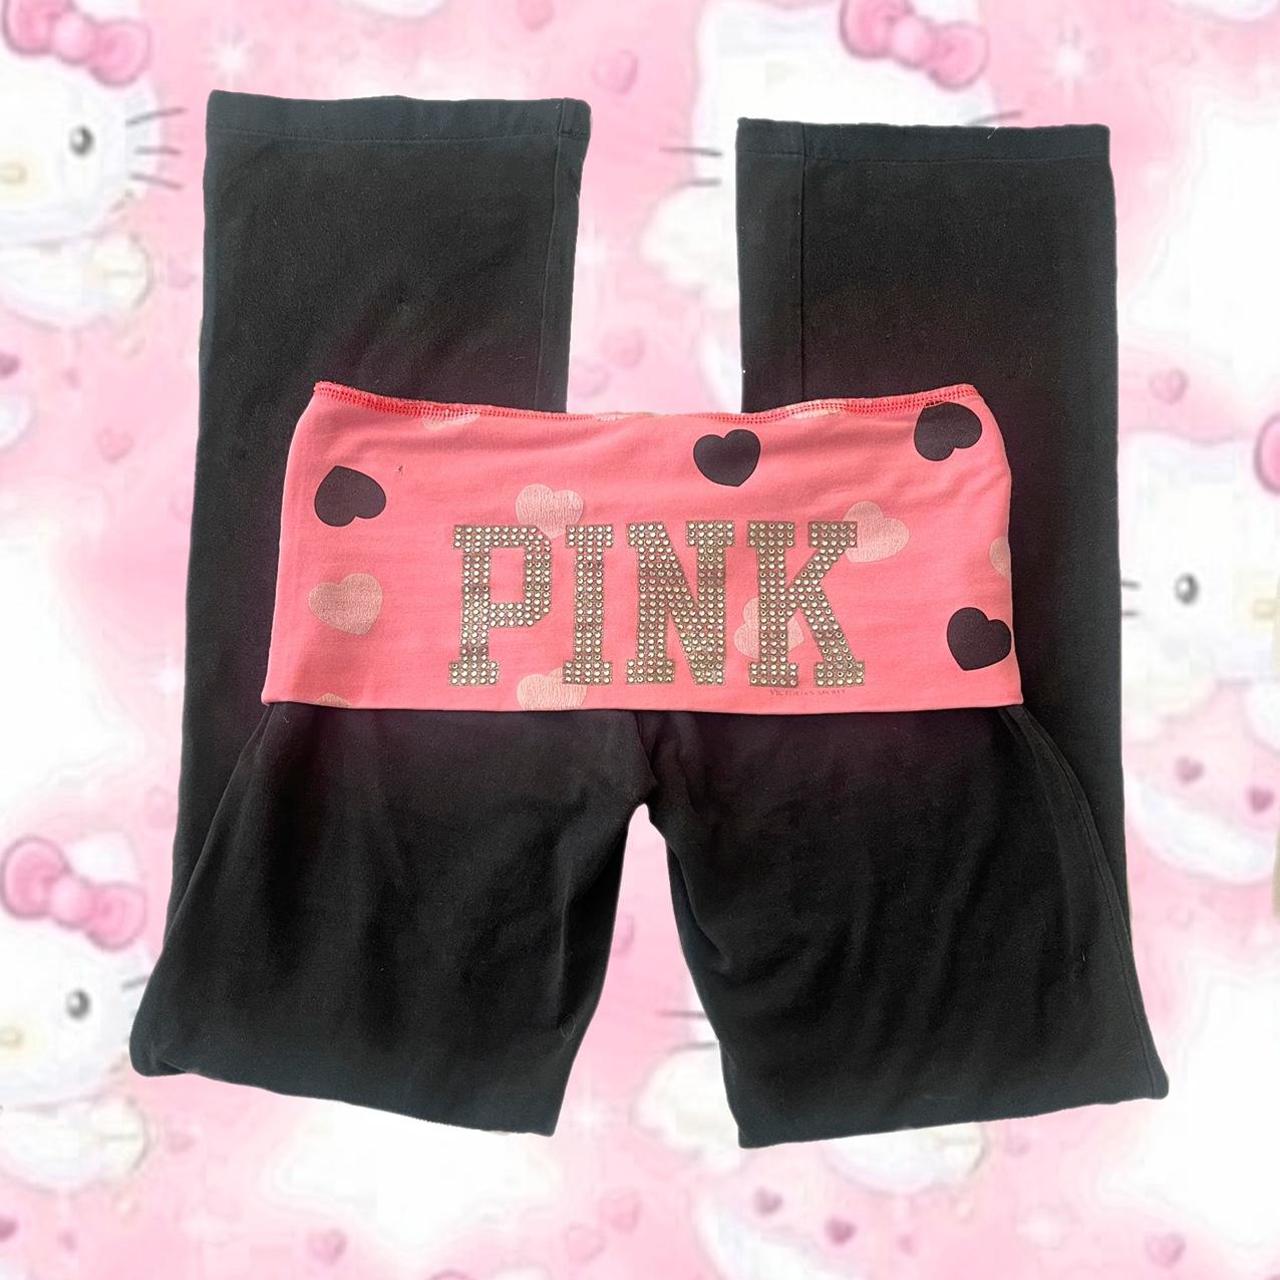 PINK - Victoria's Secret Victoria's Secret pink bling yoga